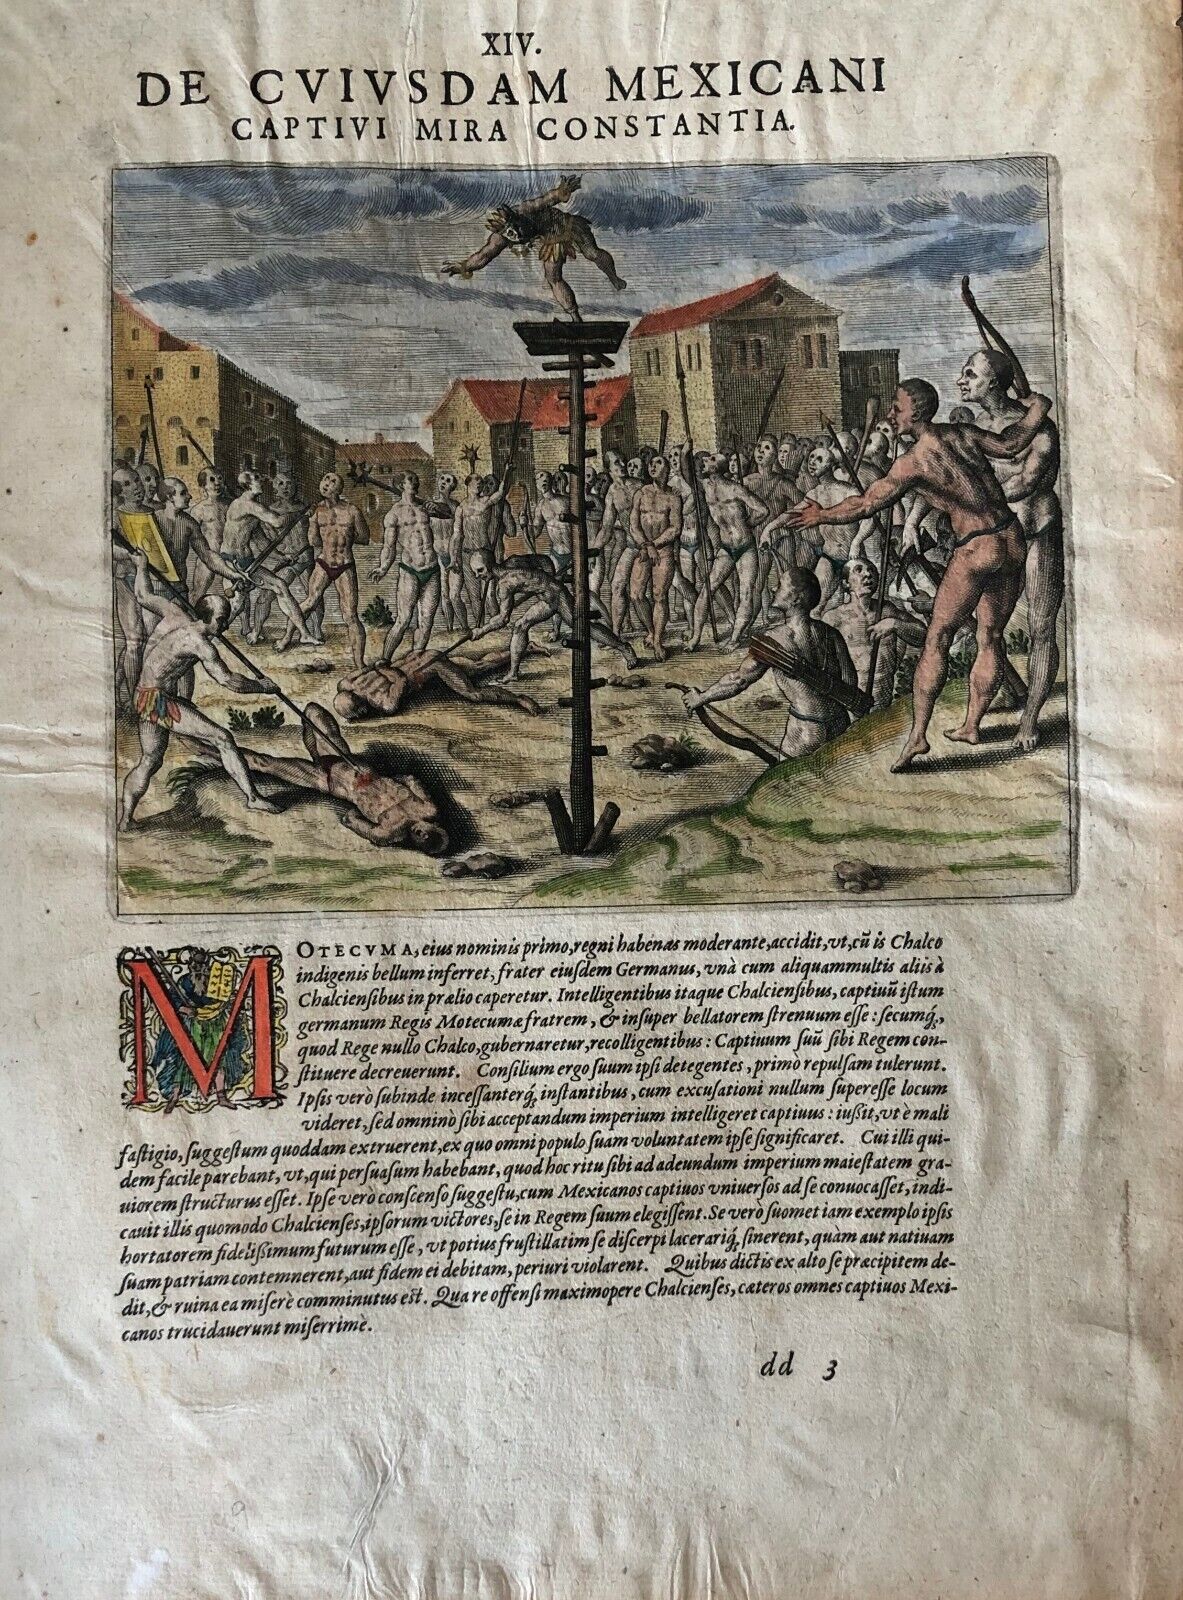 De Bry - "How the Mexicans treated their captives" 1601 - Acosta - Mexico